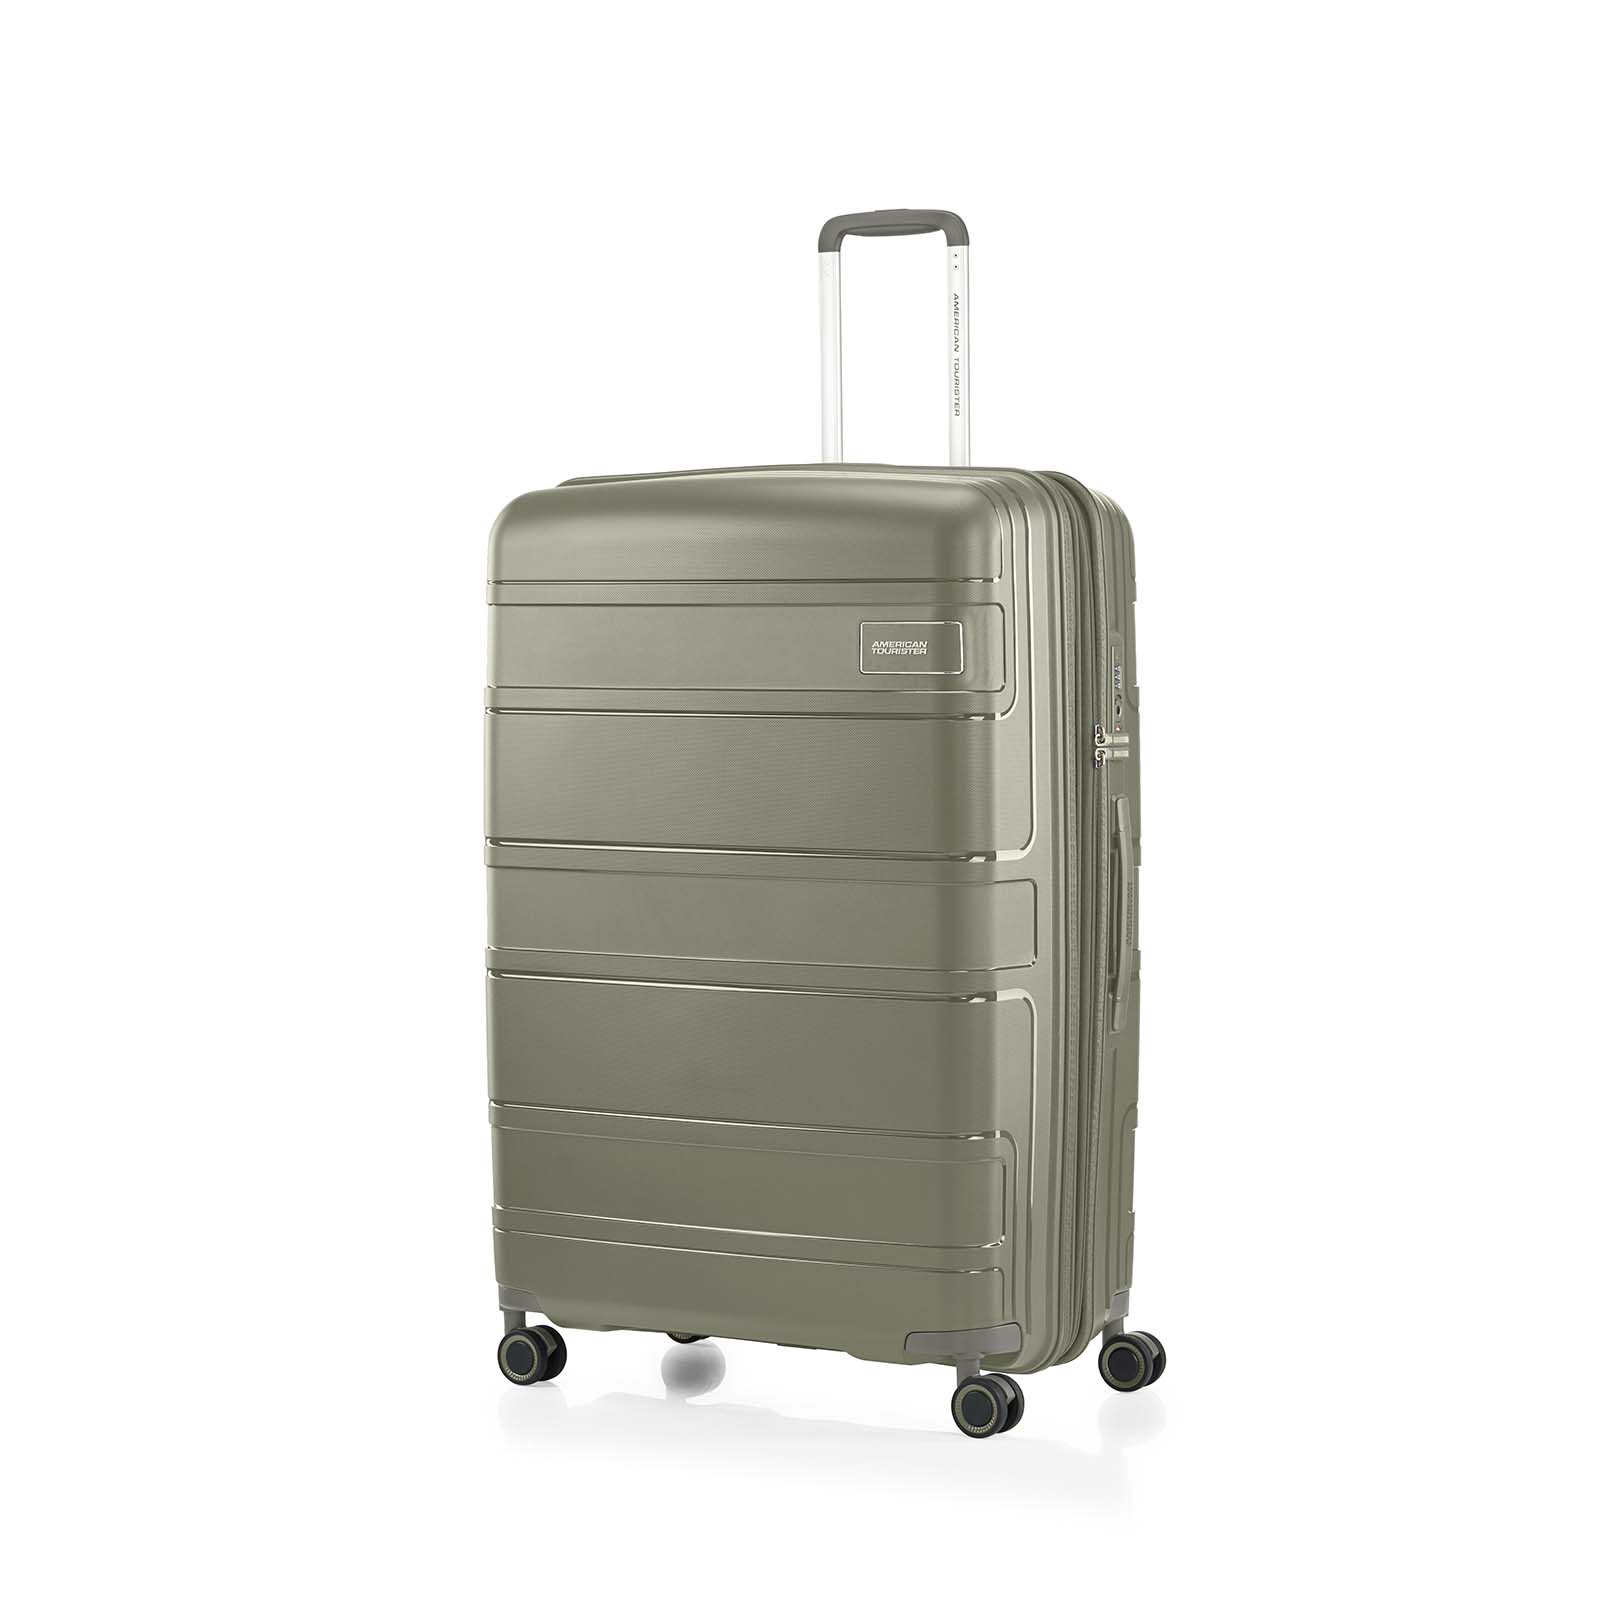 American-Tourister-American-Tourister-Light-Max-82cm-Suitcase-Khaki-Angle